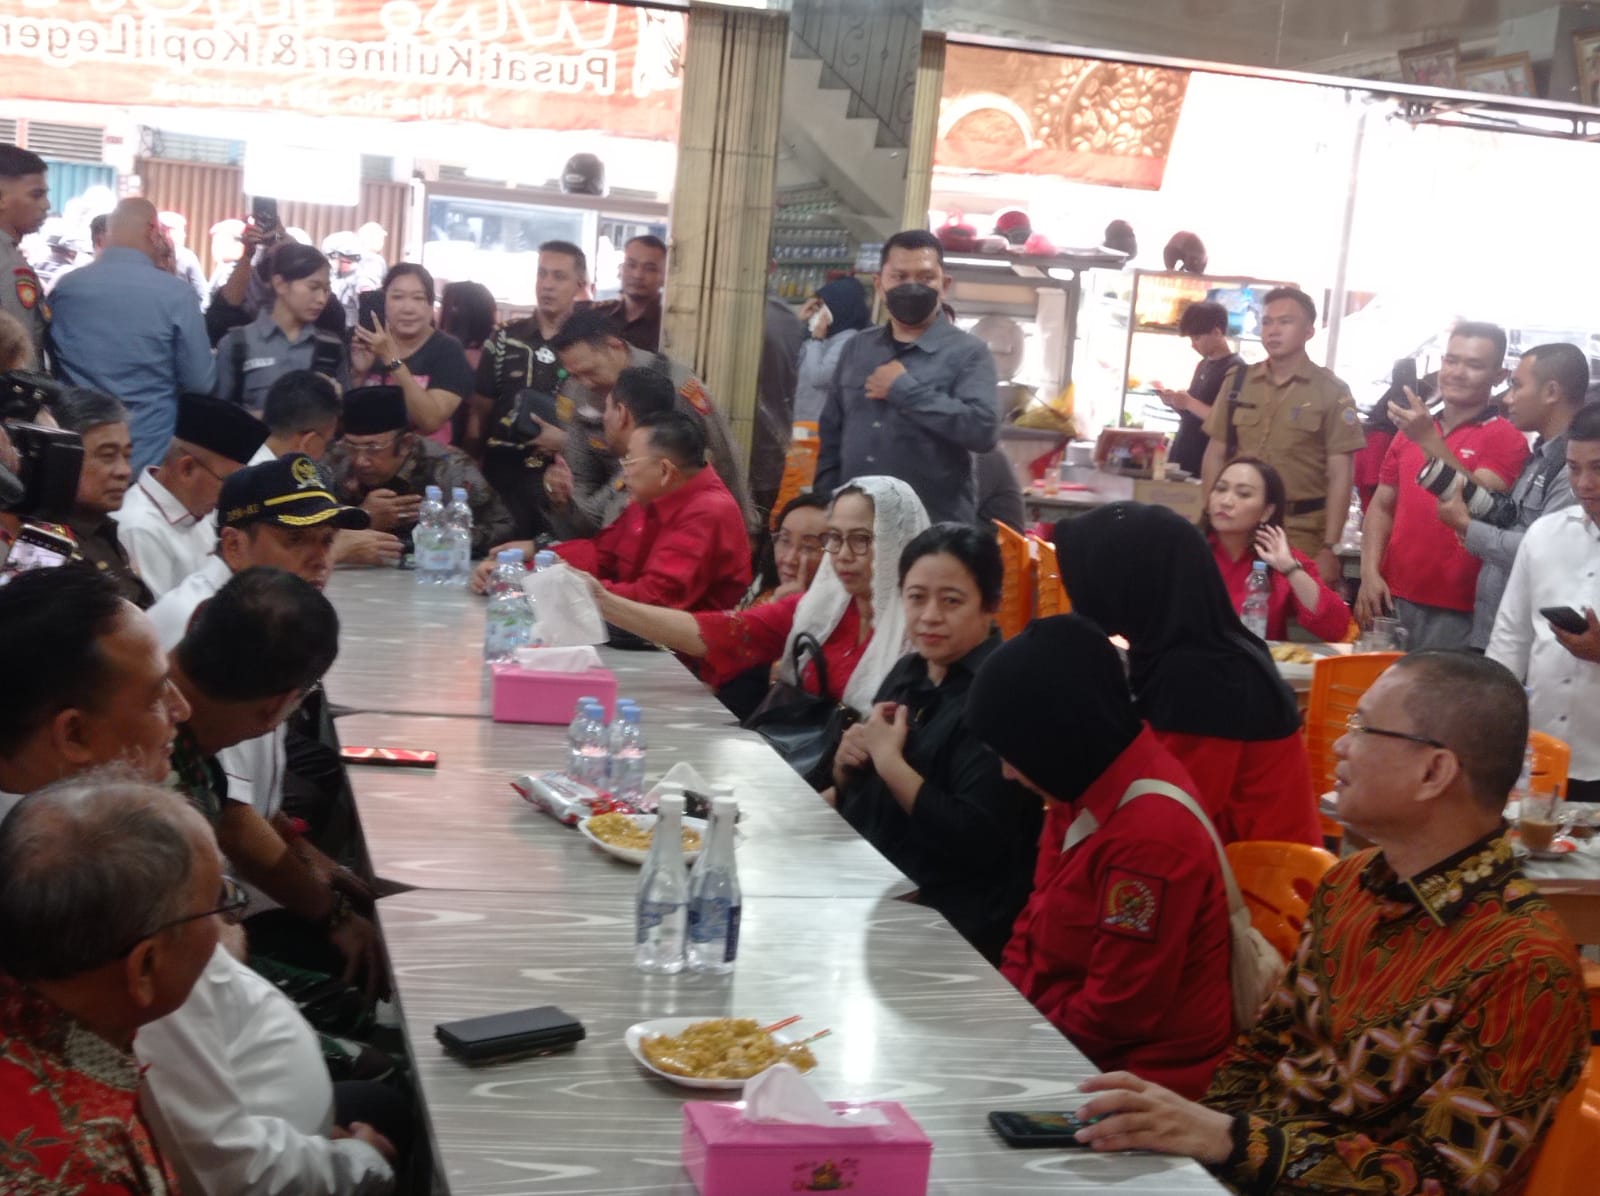 Suasana dialog antara Puan dan warga Singkawang lintas etnis/Sinpo.id/Tim Media